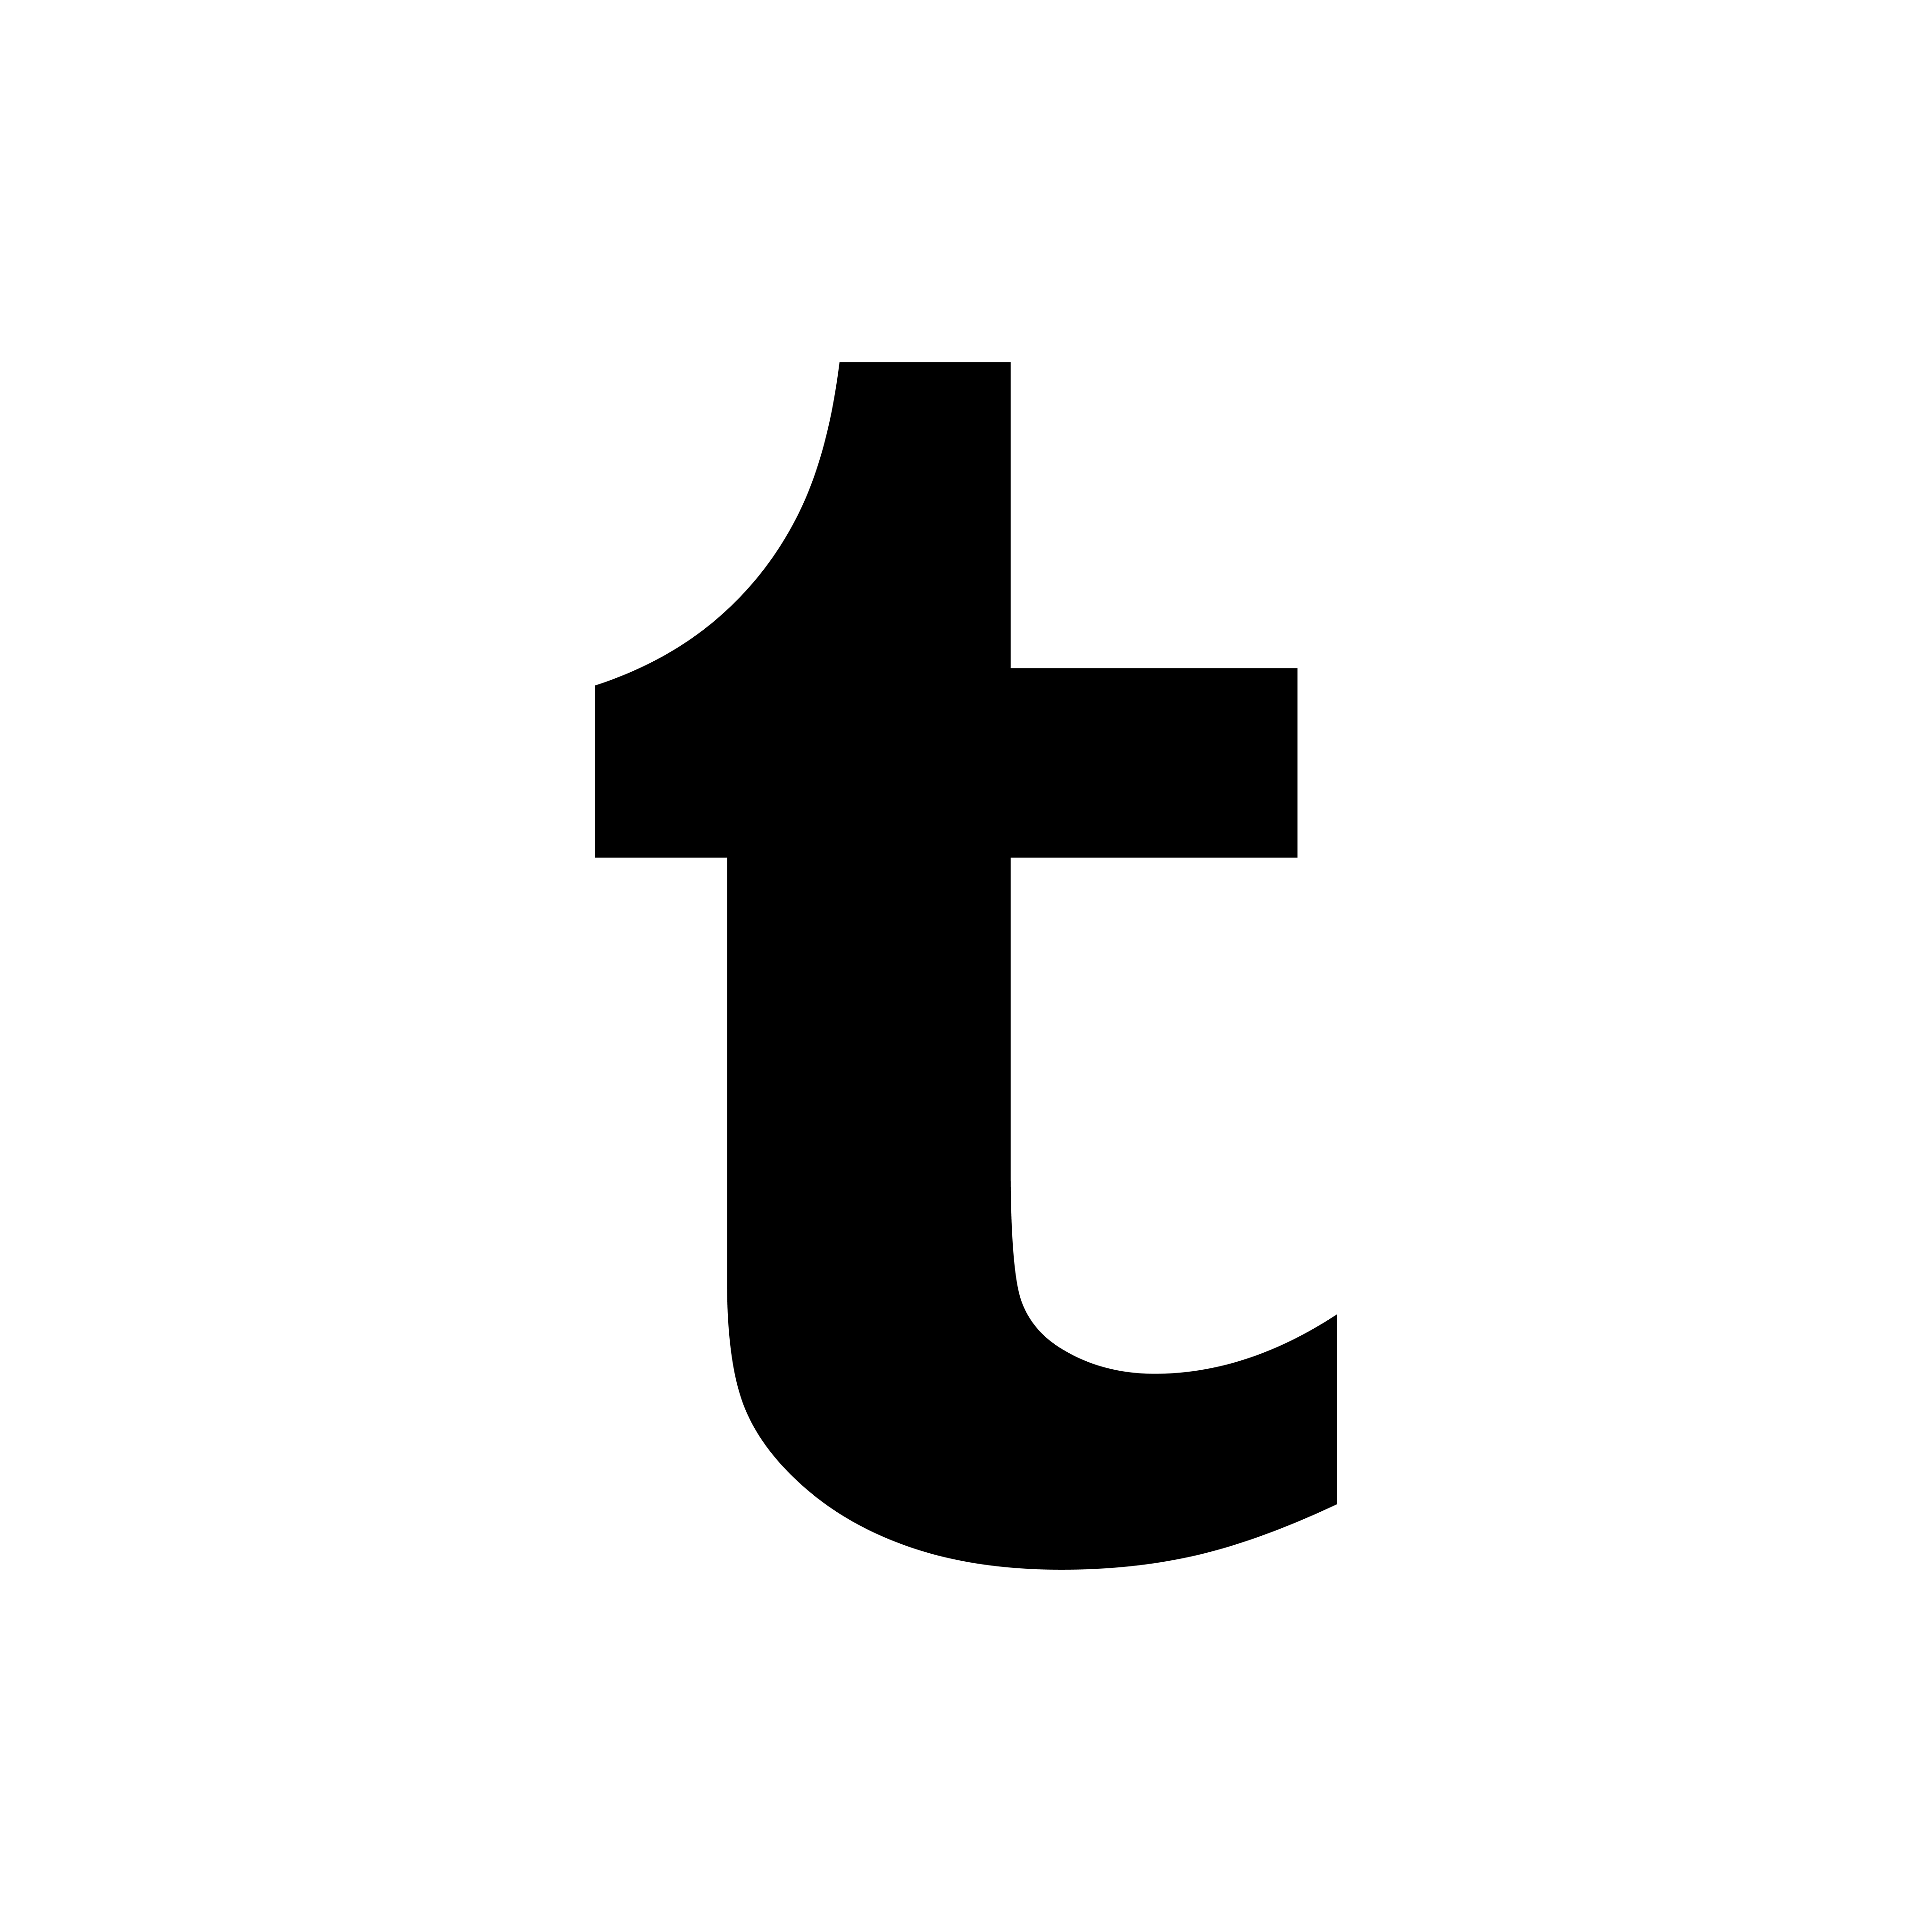 Black and White Tumblr Logo - White Tumblr Vector Logo Png Images